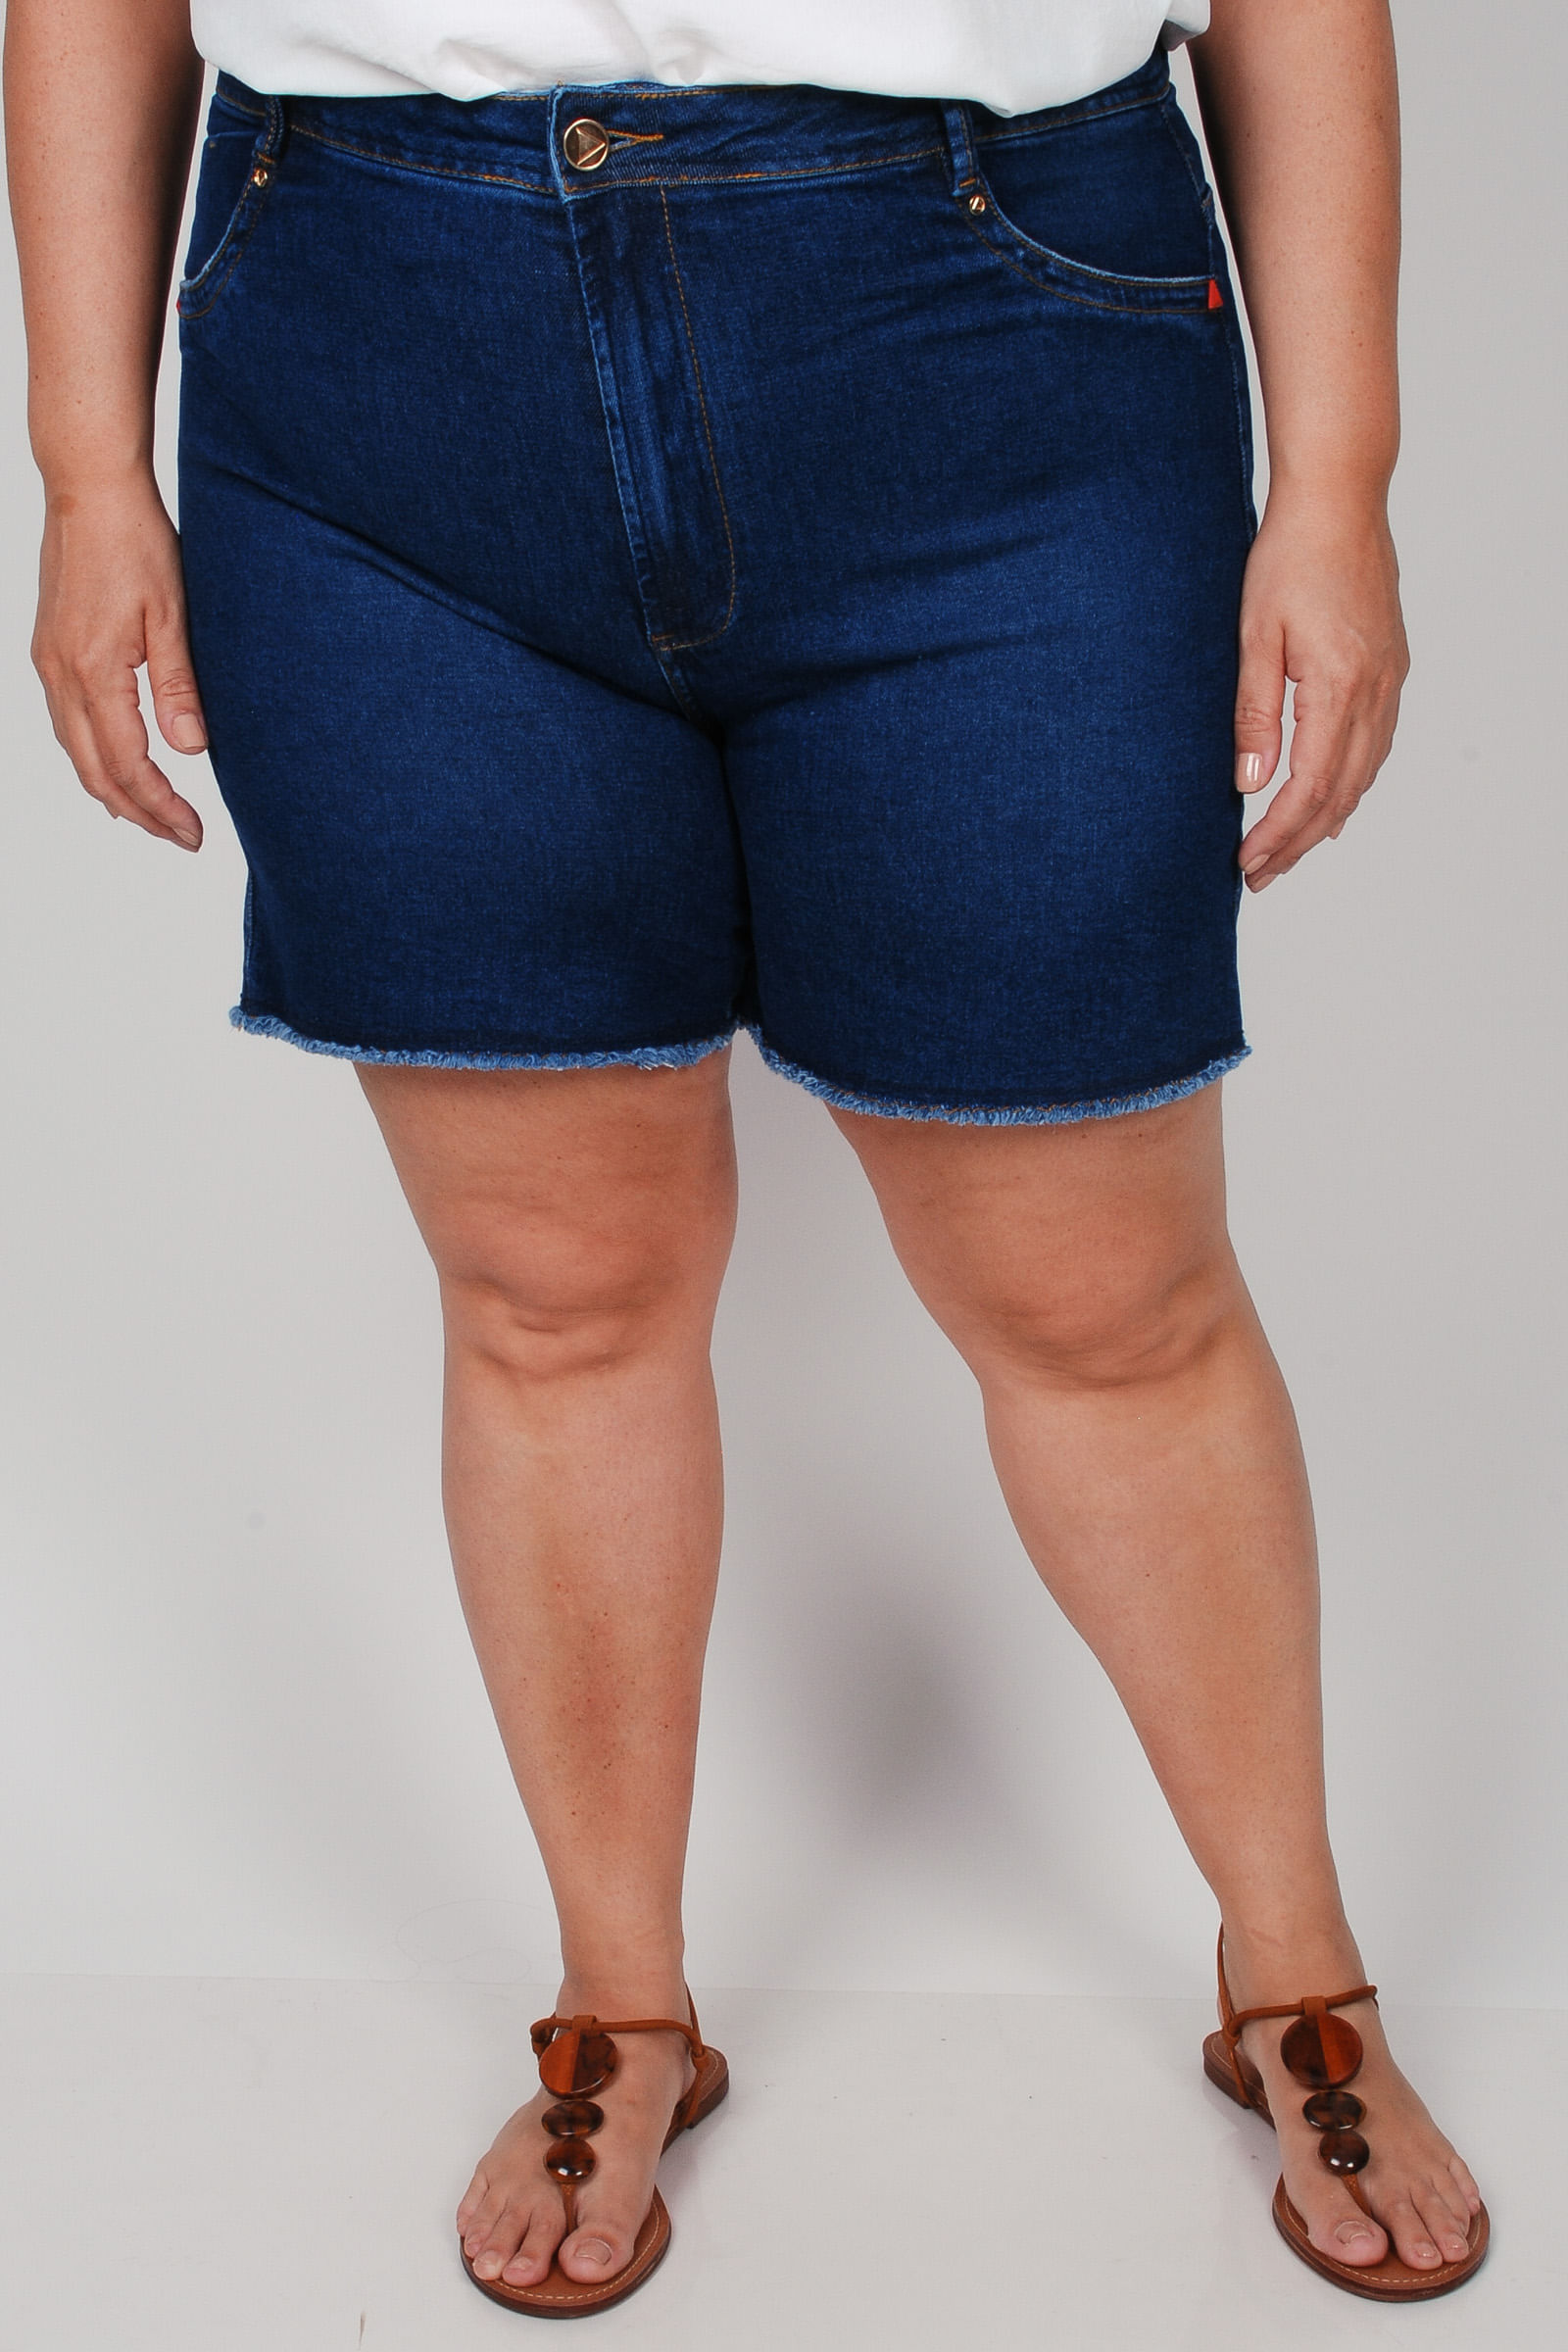 Shorts-jeans-com-barra-desfiada-plus-size_0102_3